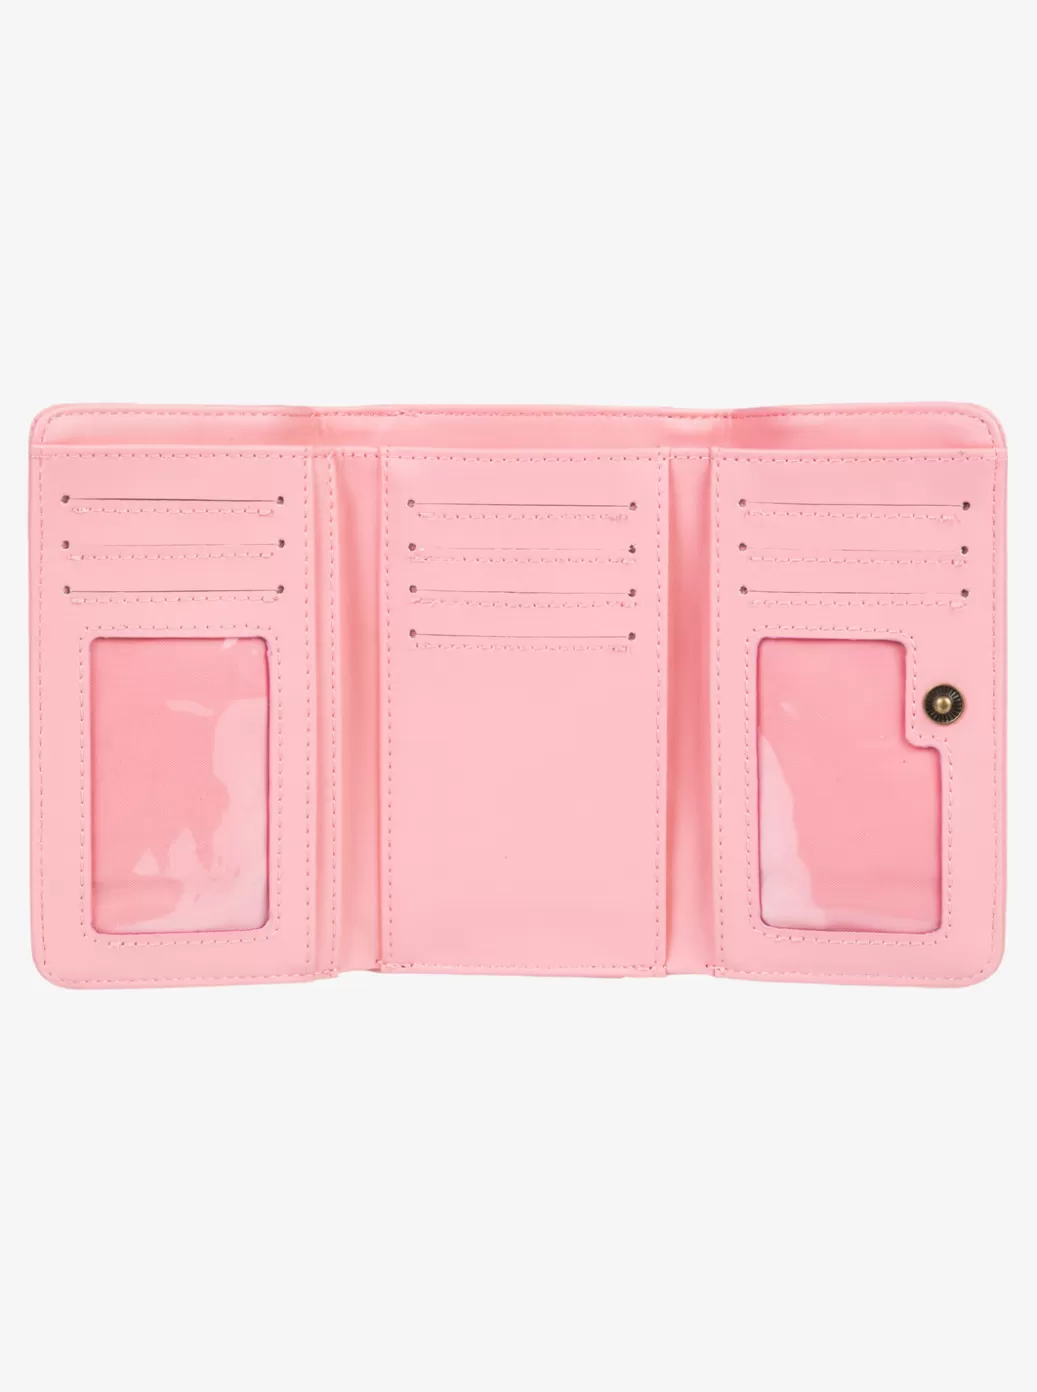 Other Accessories | WOMEN ROXY Crazy Diamond Tri-Fold Wallet Sachet Pink